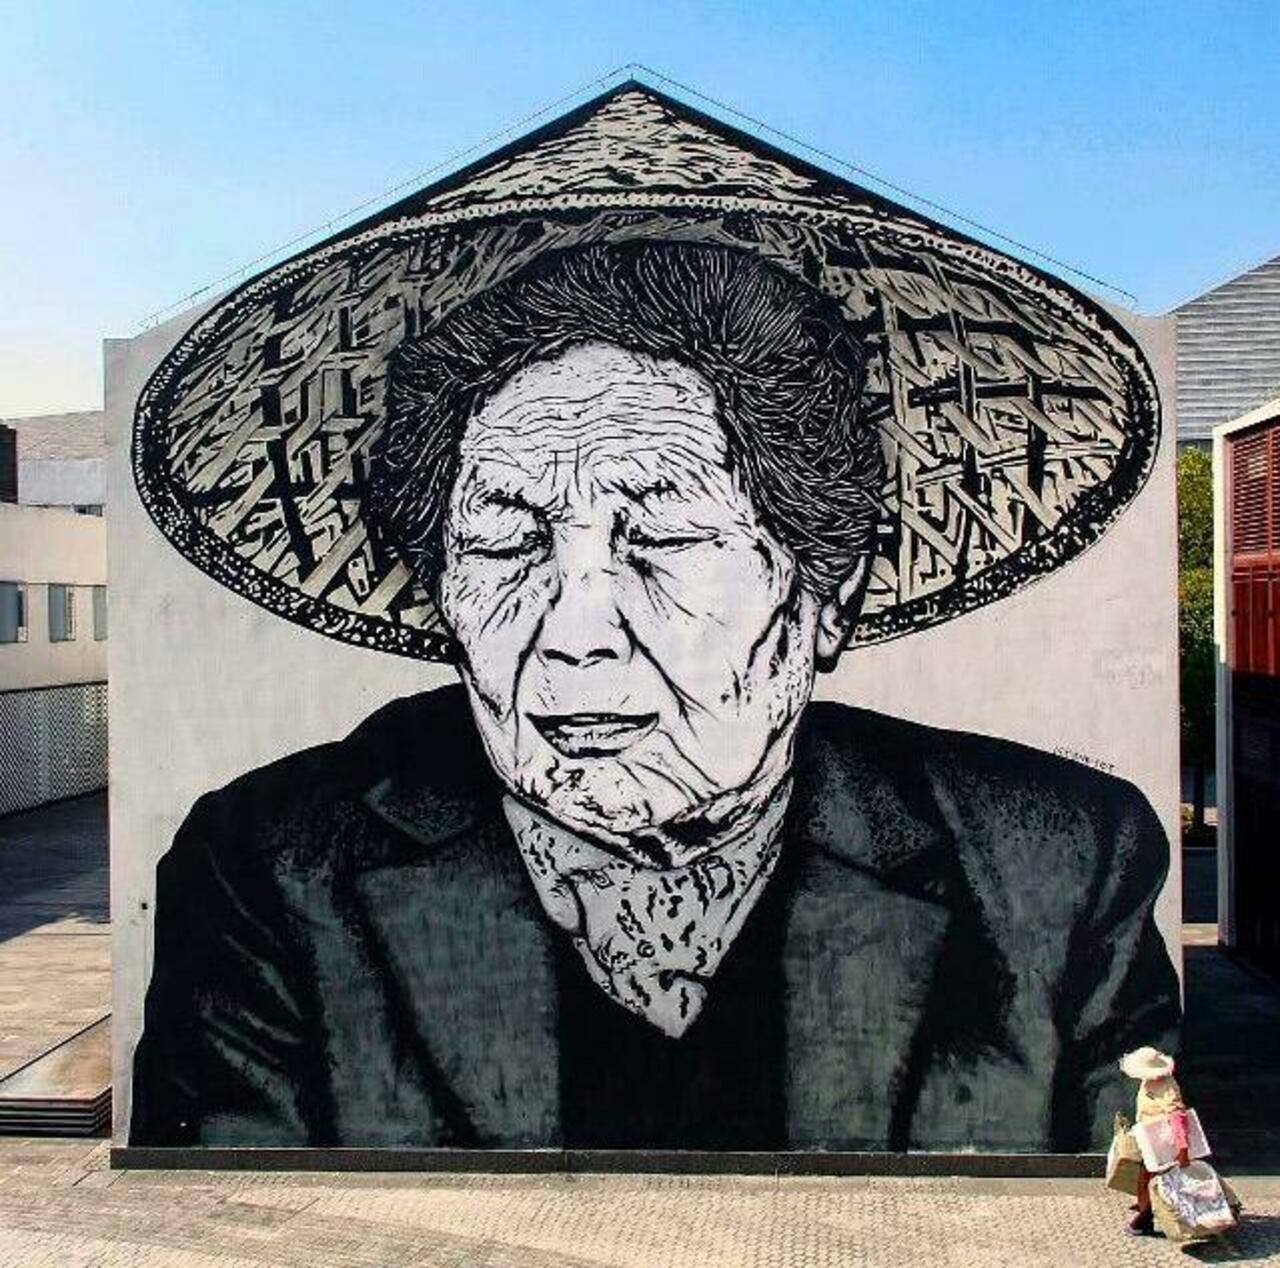 New Street Art by icy&sot in Shanghai  

#art #graffiti #mural #streetart http://t.co/950MLgY2VT